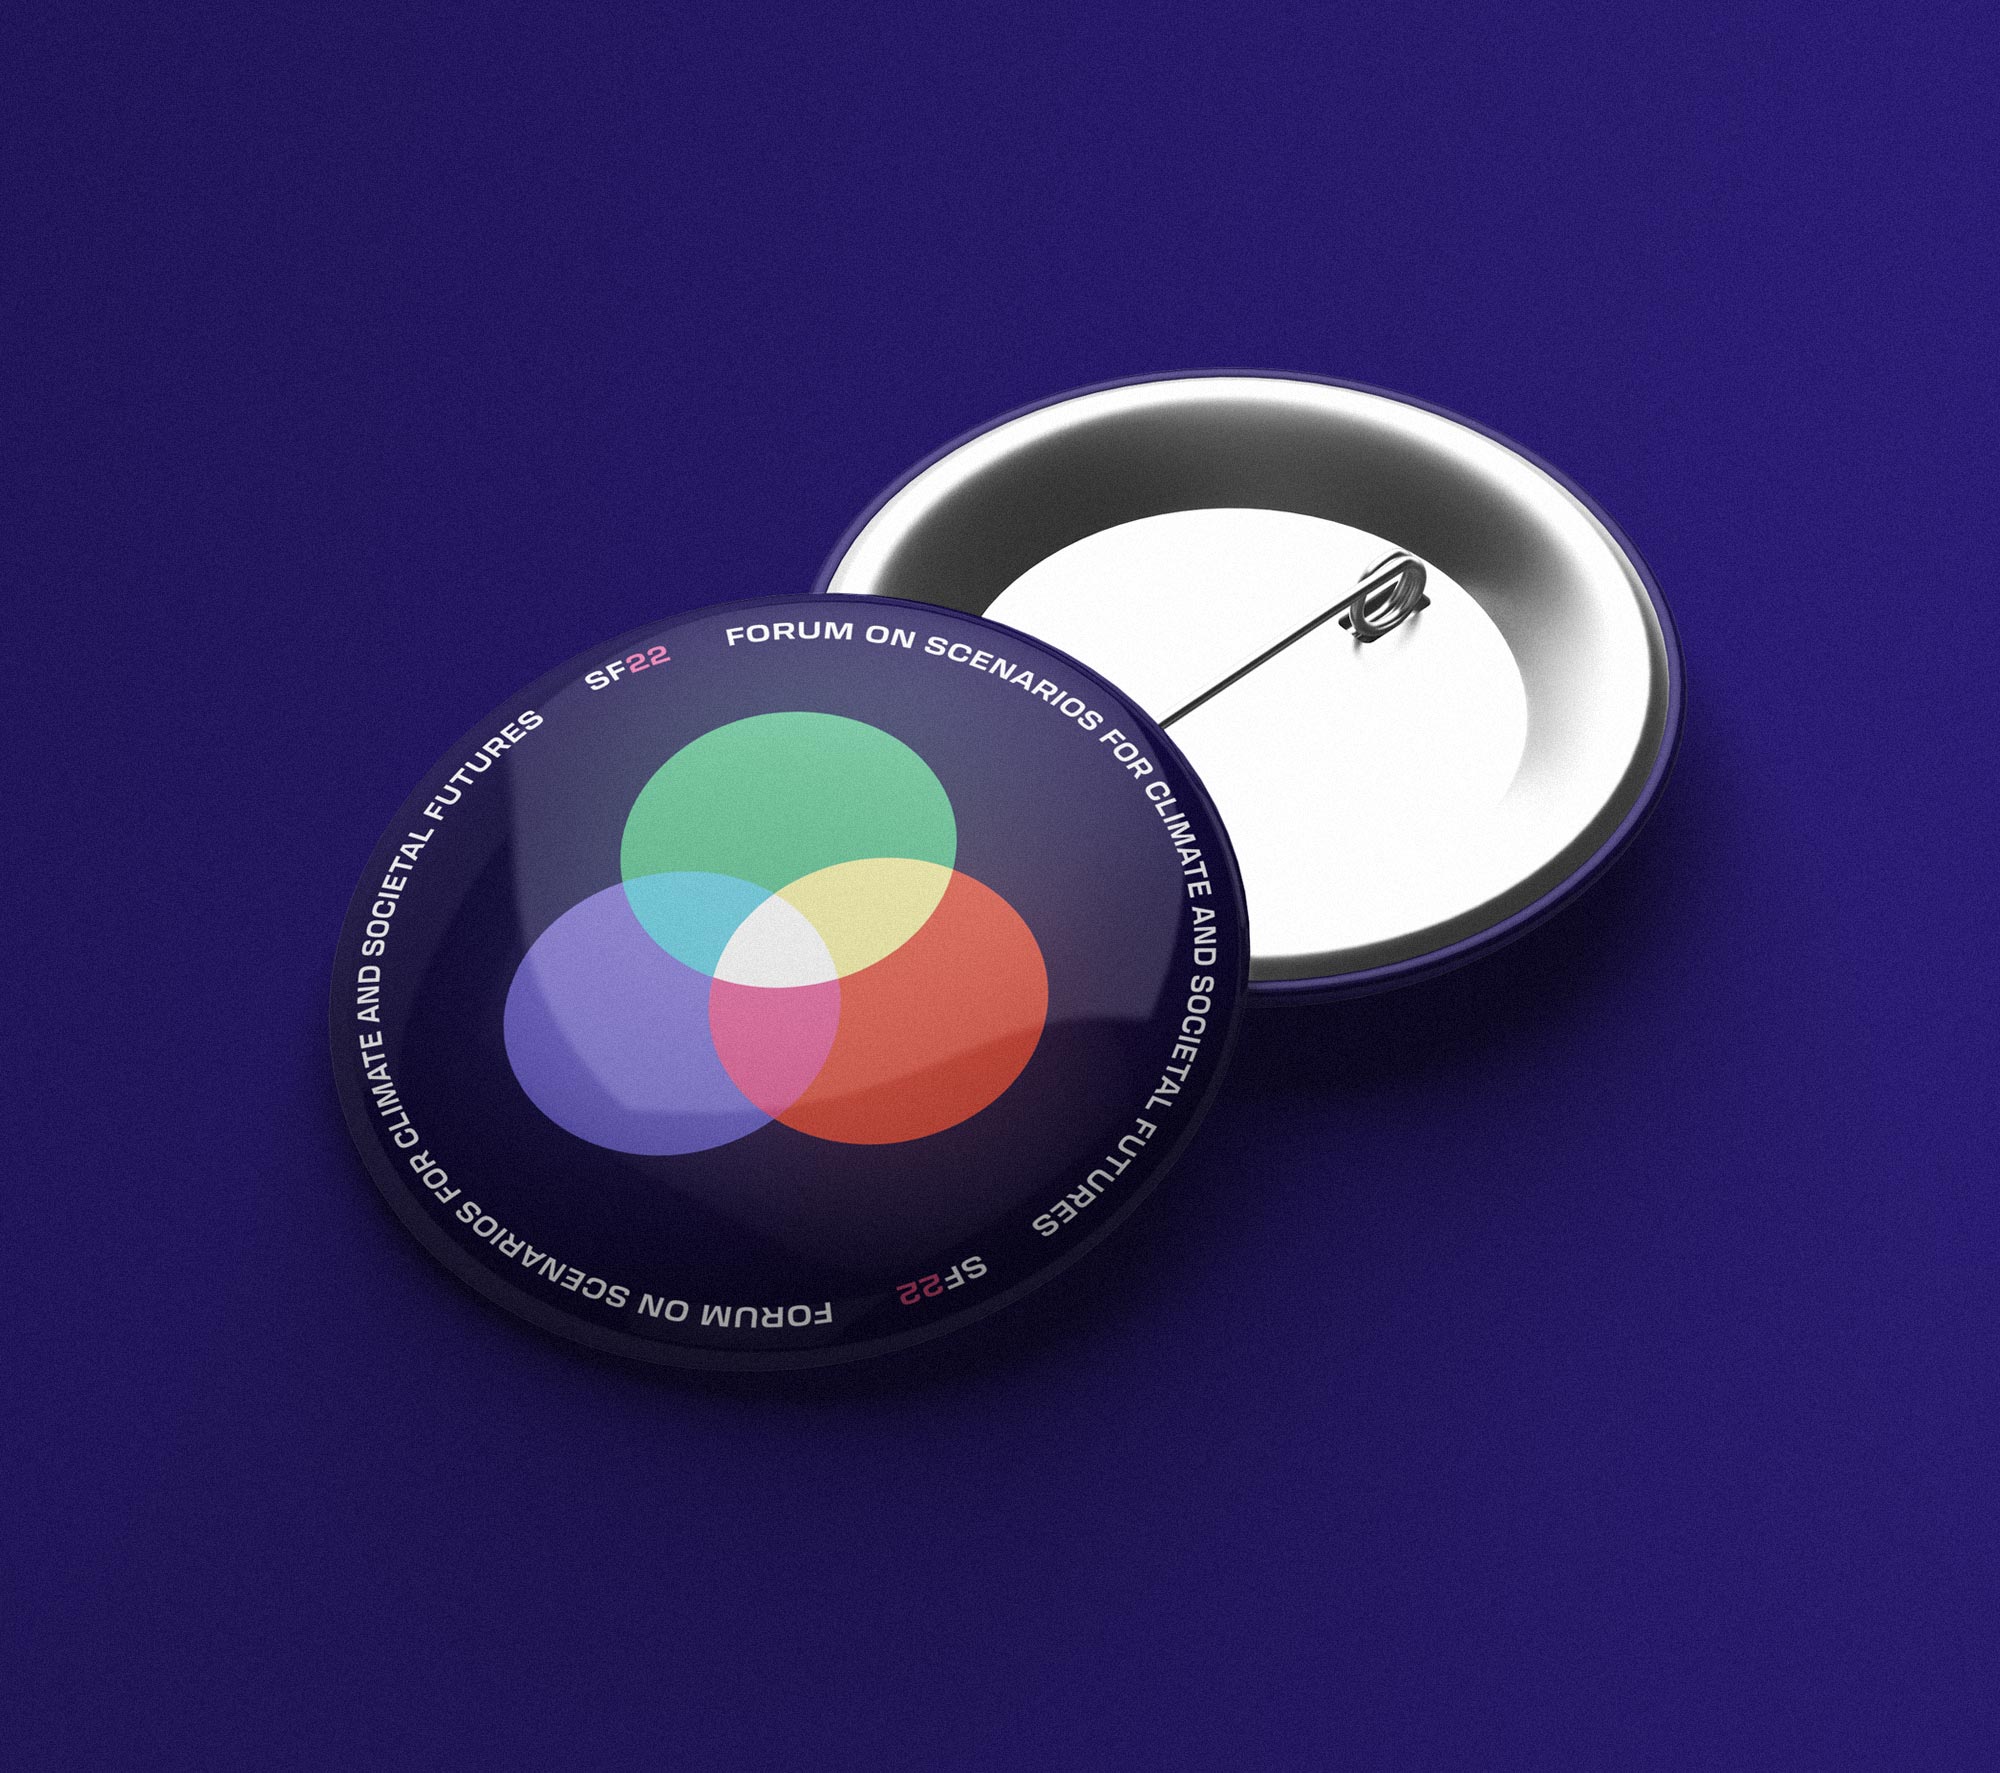 adam-islaam-button-badge-conference-iconics-scenarios-forum-branding-logo-conference-typography-strategic-graphic-design